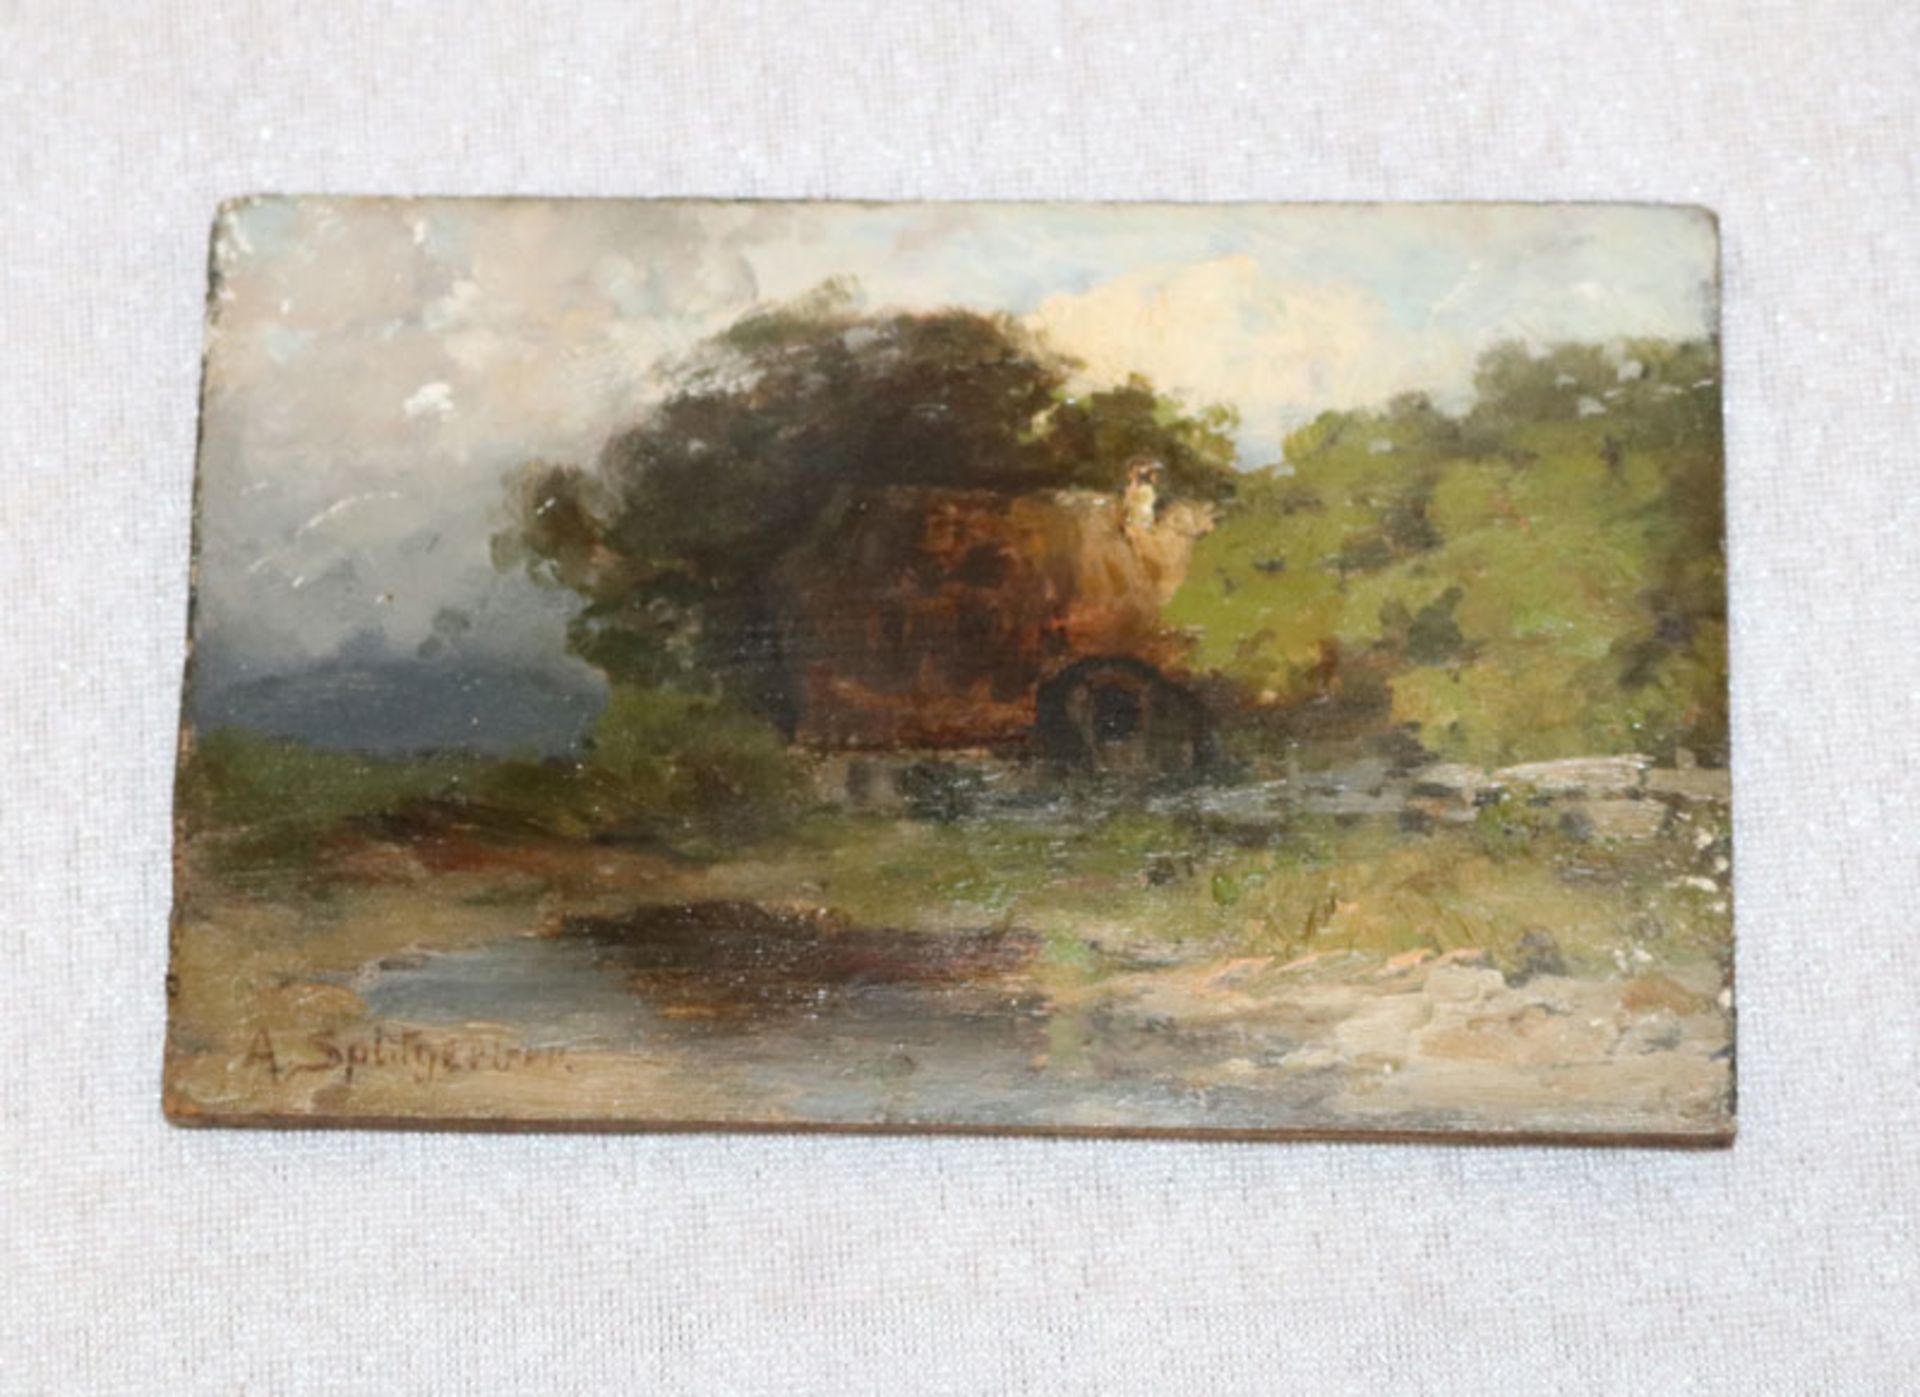 Gemälde ÖL/Holz 'Landschafts-Szenerie mit Mühle', signiert A. (August) Splitgerber, * 1844 Steingade